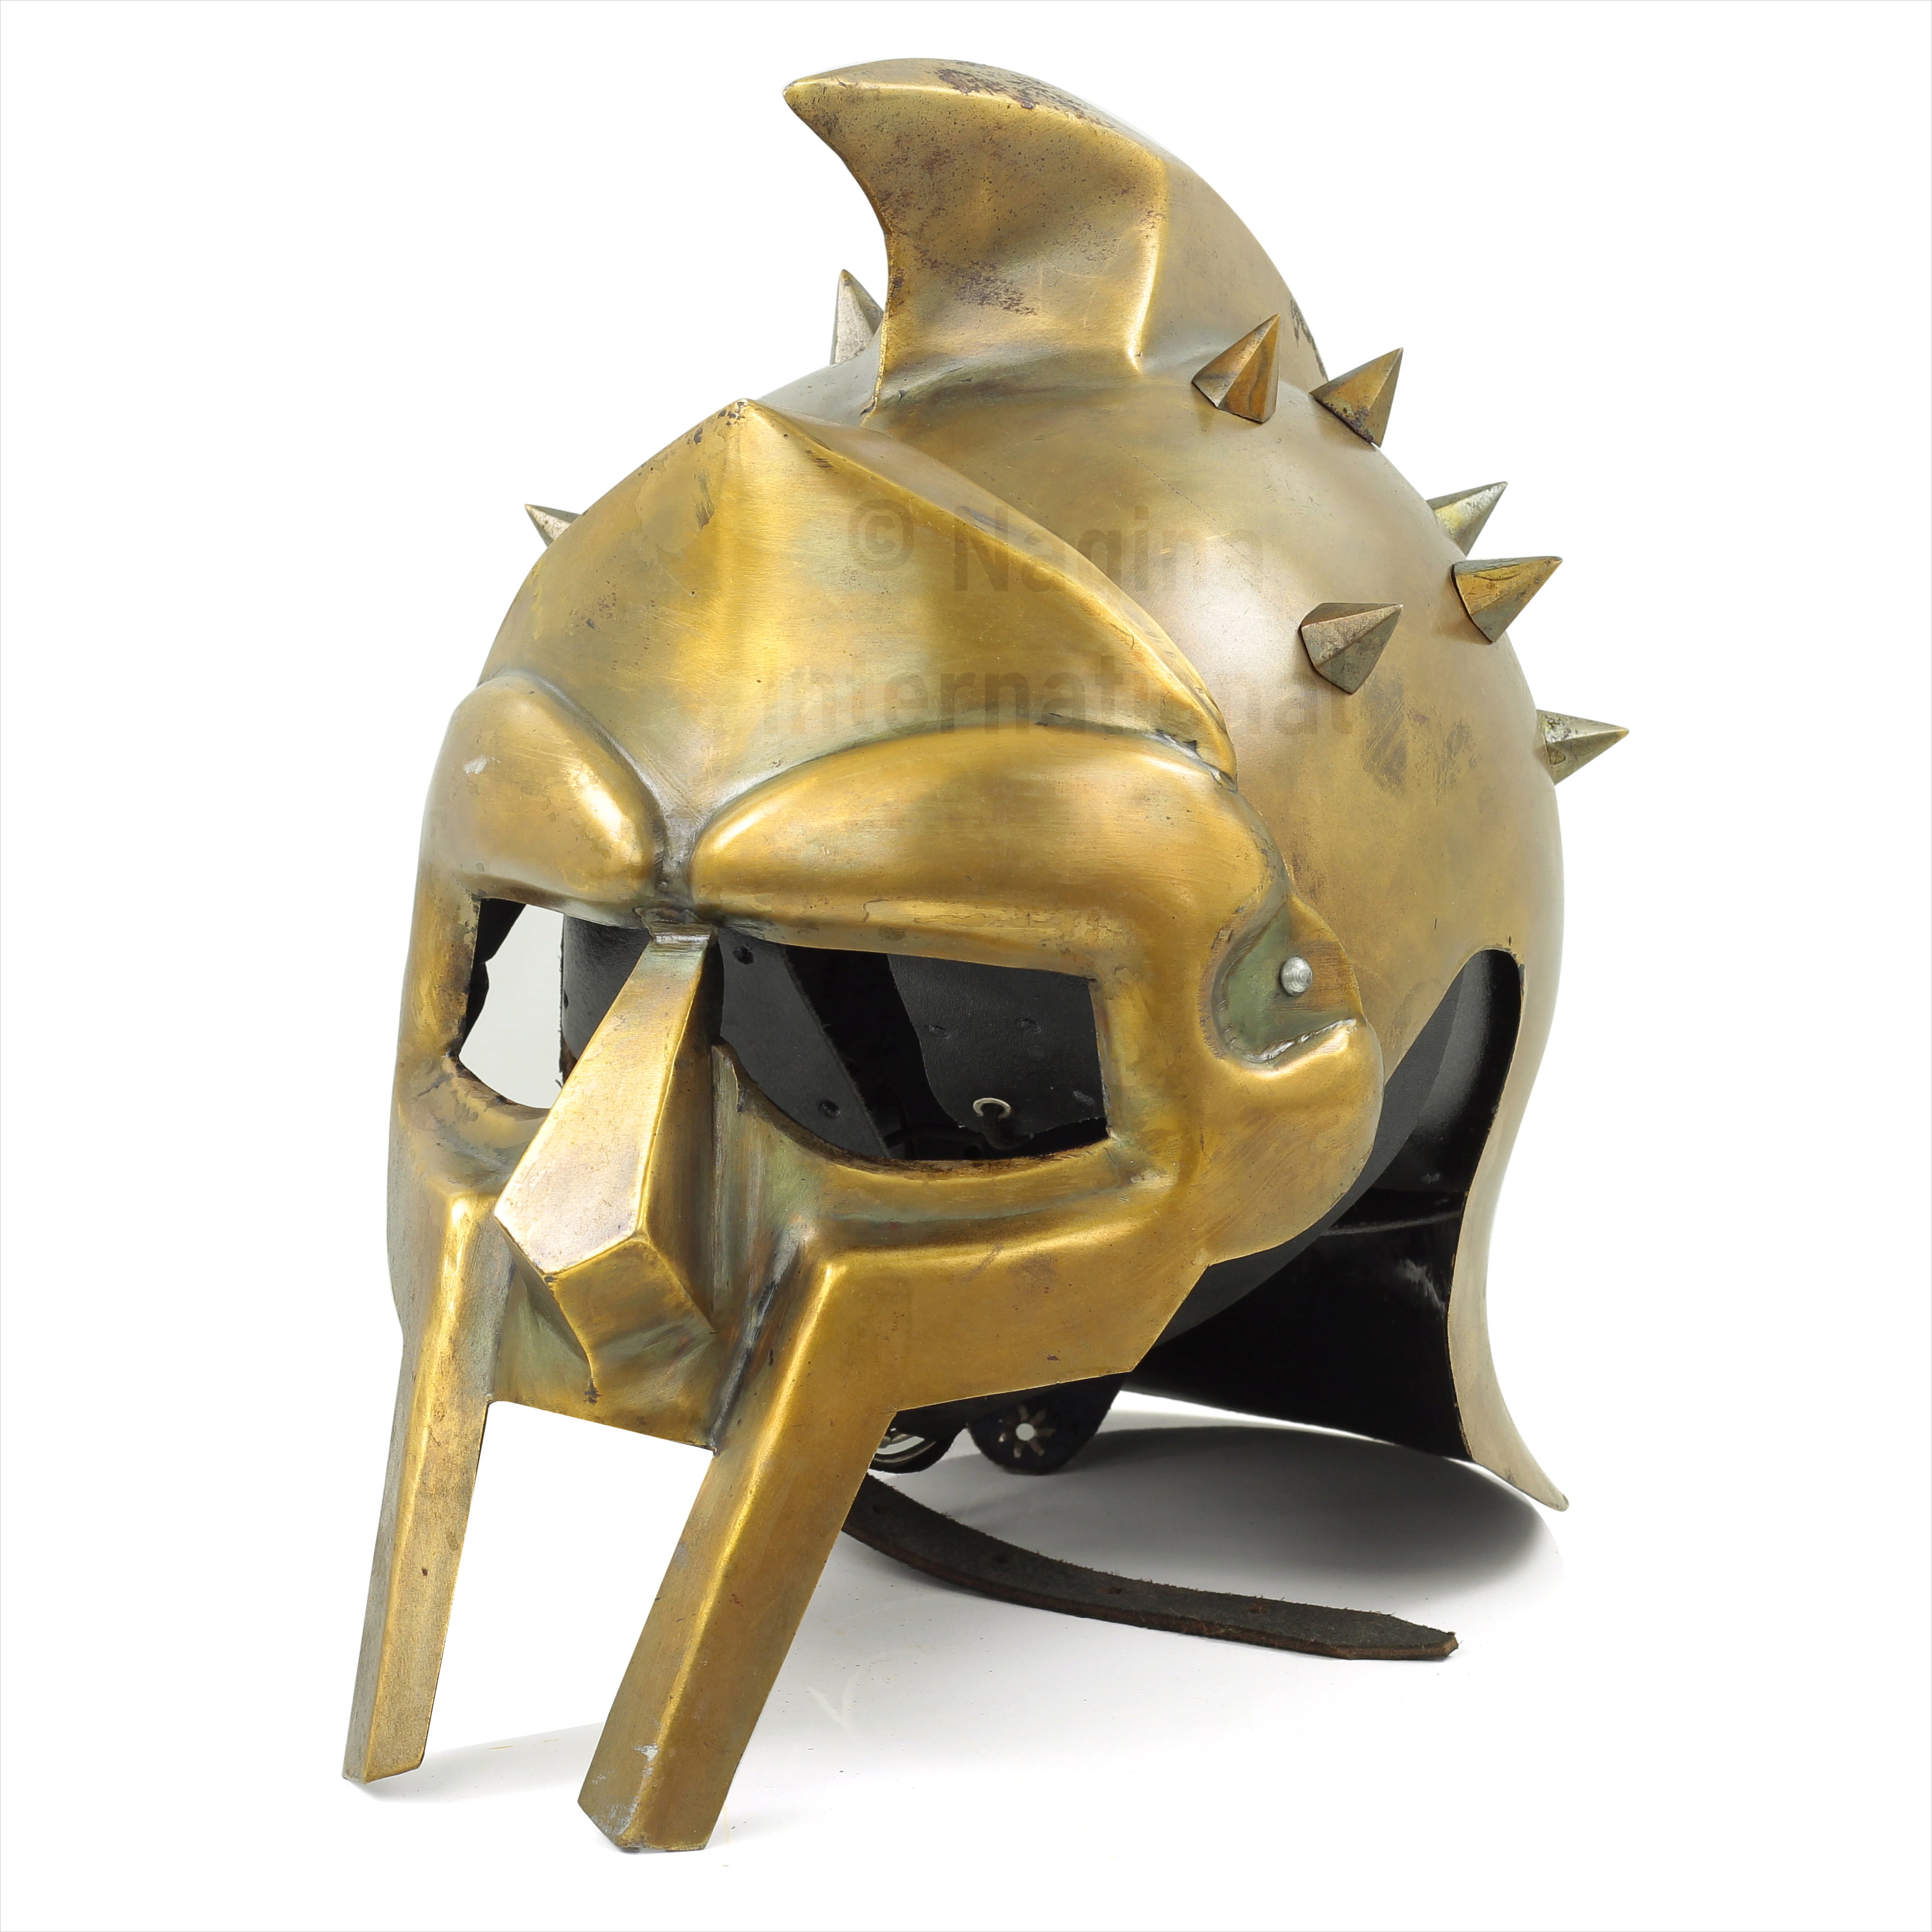 The Great Mini Gladiator Maximum Helmet with Display Stand Rennactor Helmet 